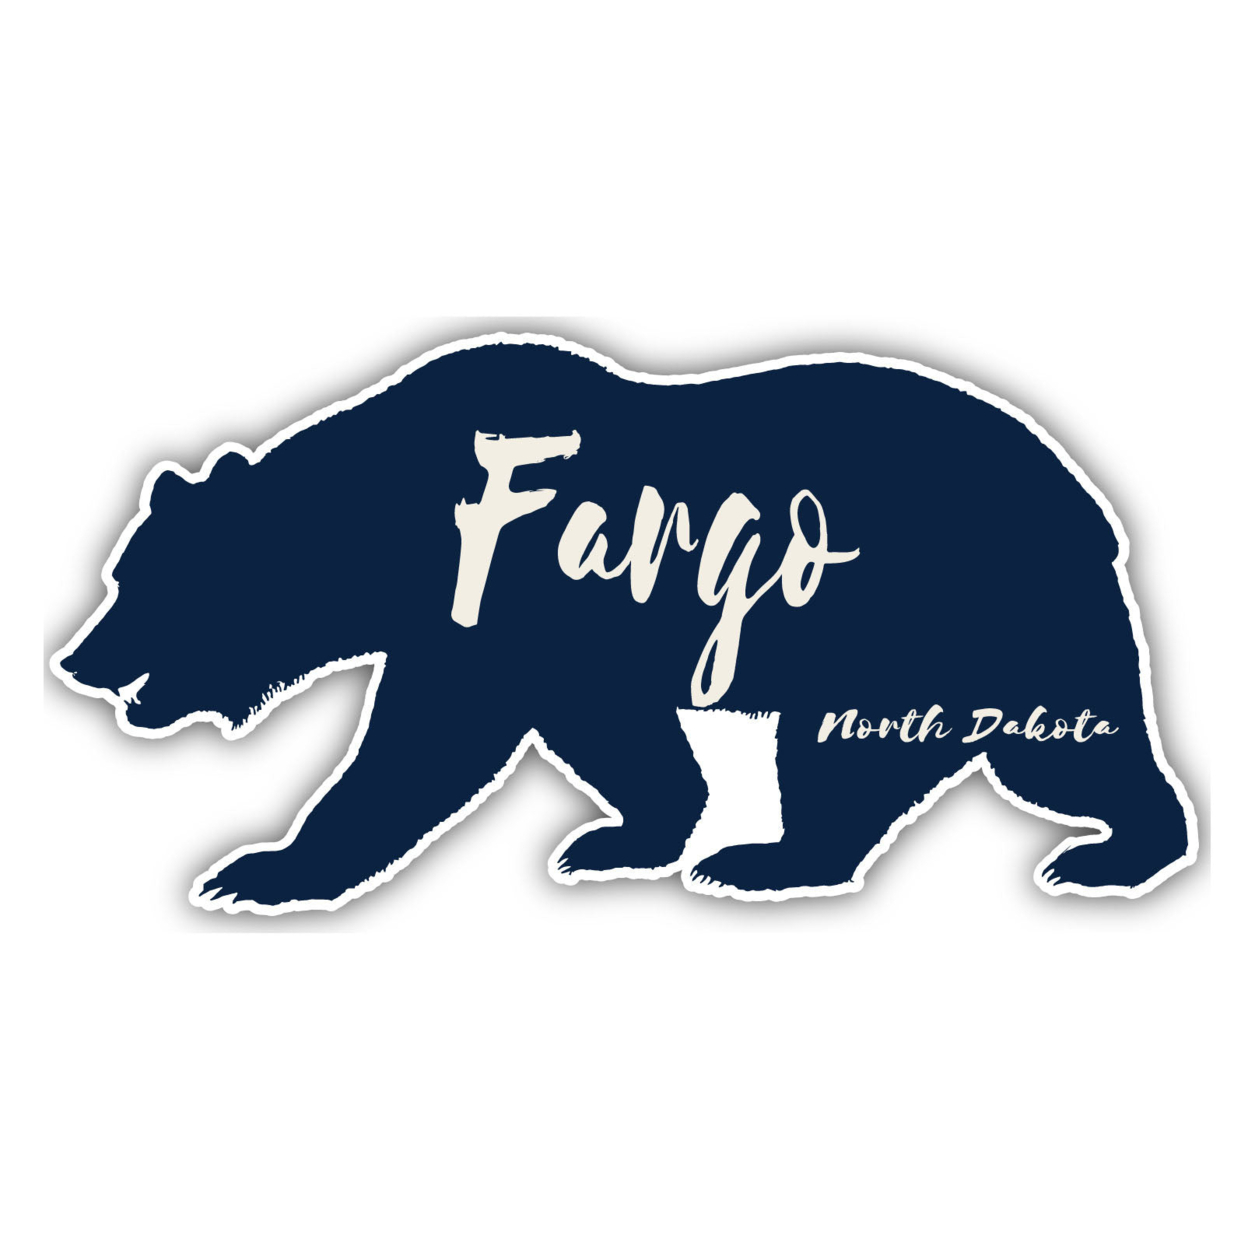 Fargo North Dakota Souvenir Decorative Stickers (Choose Theme And Size) - 4-Pack, 4-Inch, Adventures Awaits